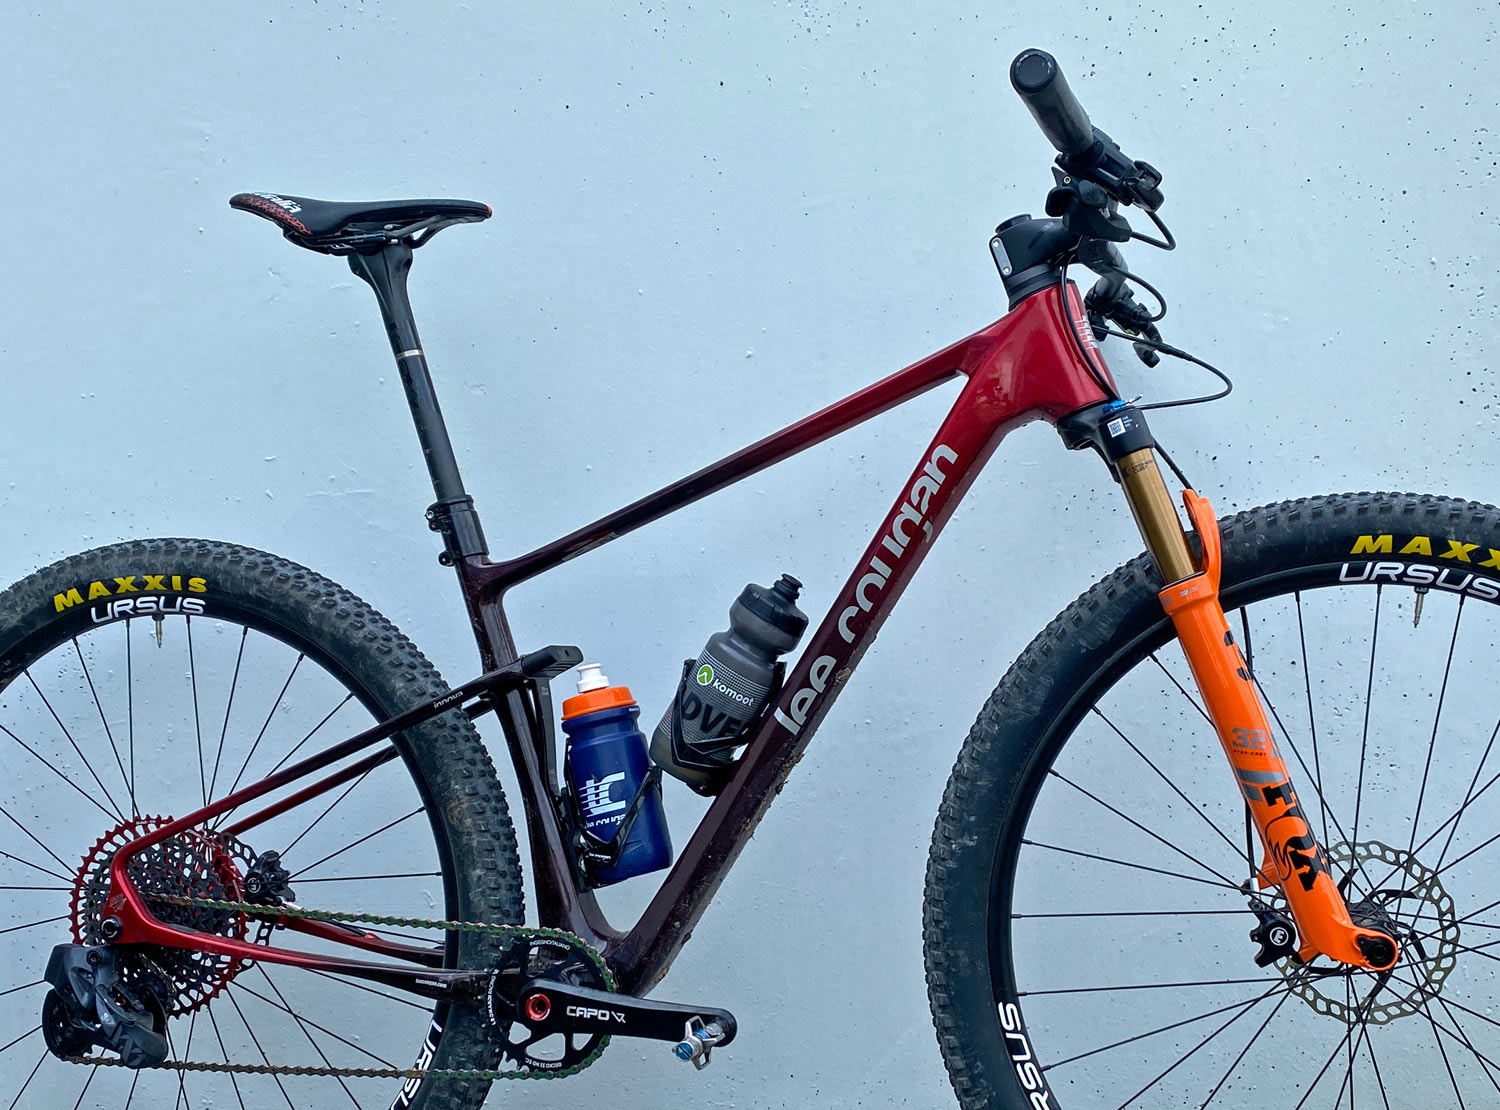 Lee Cougan Rampage Innova 30mm carbon XC MTB mountain bike softail, angled